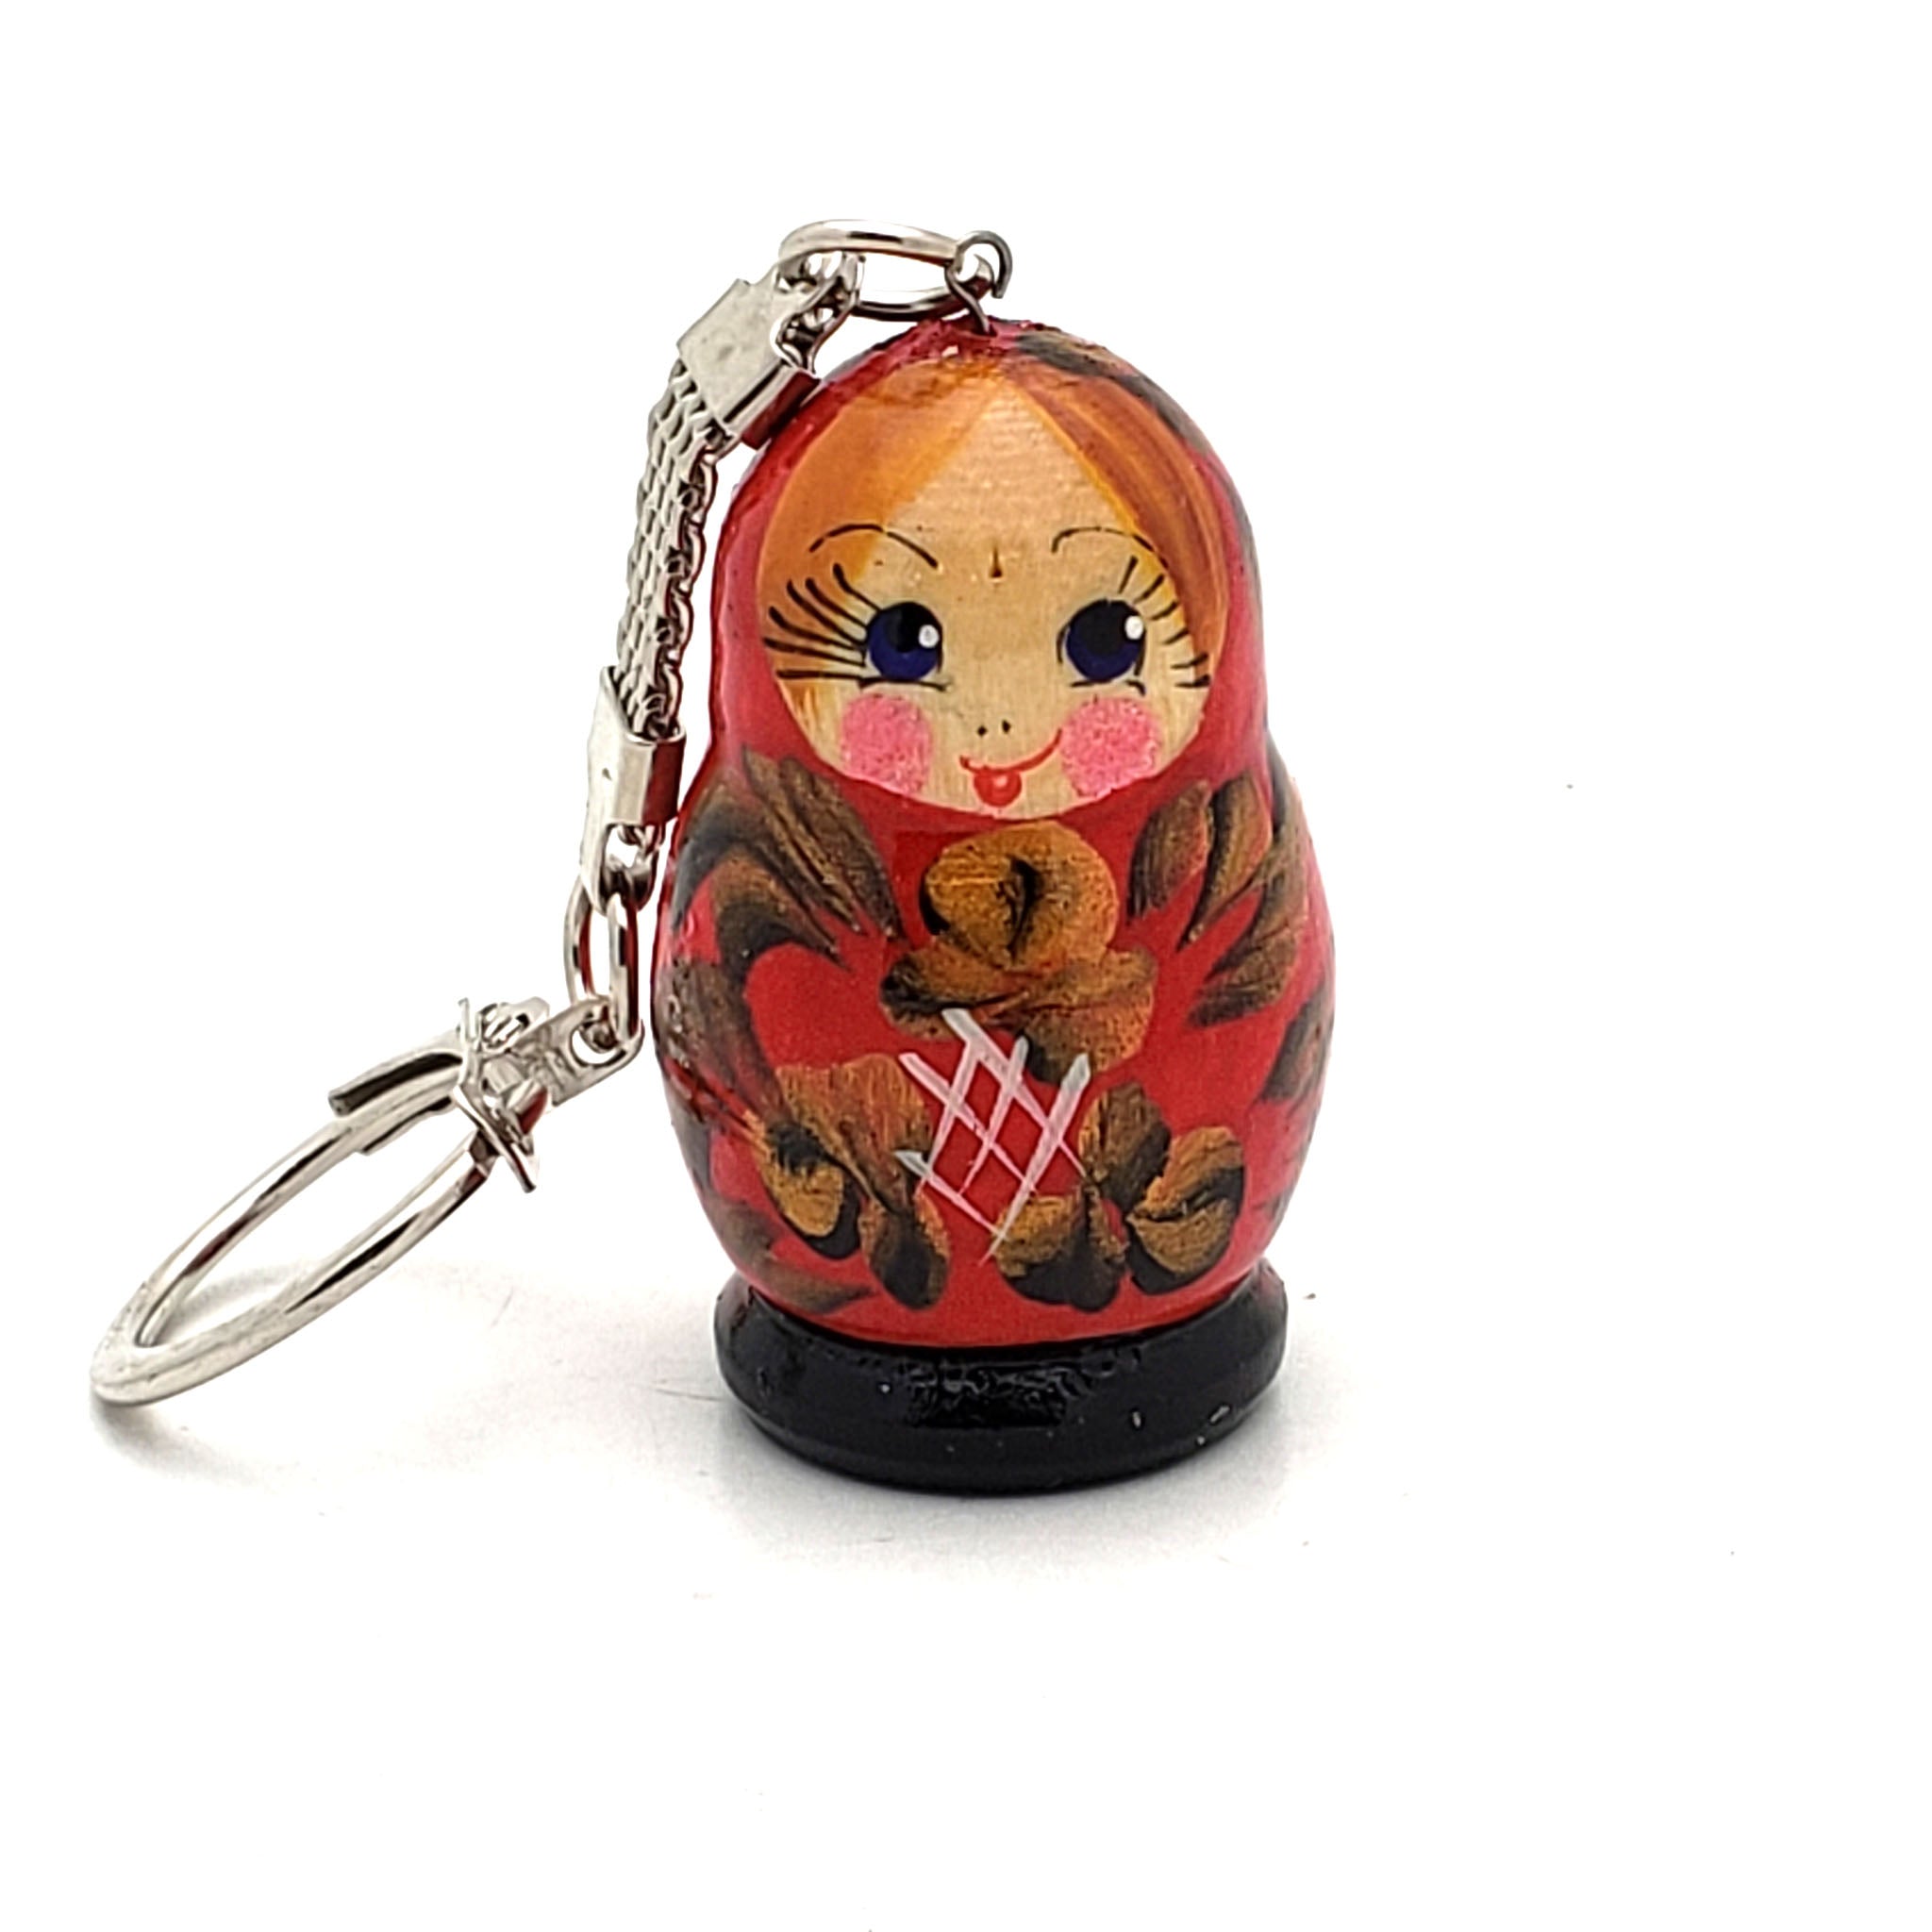 Cute Russian Matryoshka Keychain Russian stacking dolls For Sale.